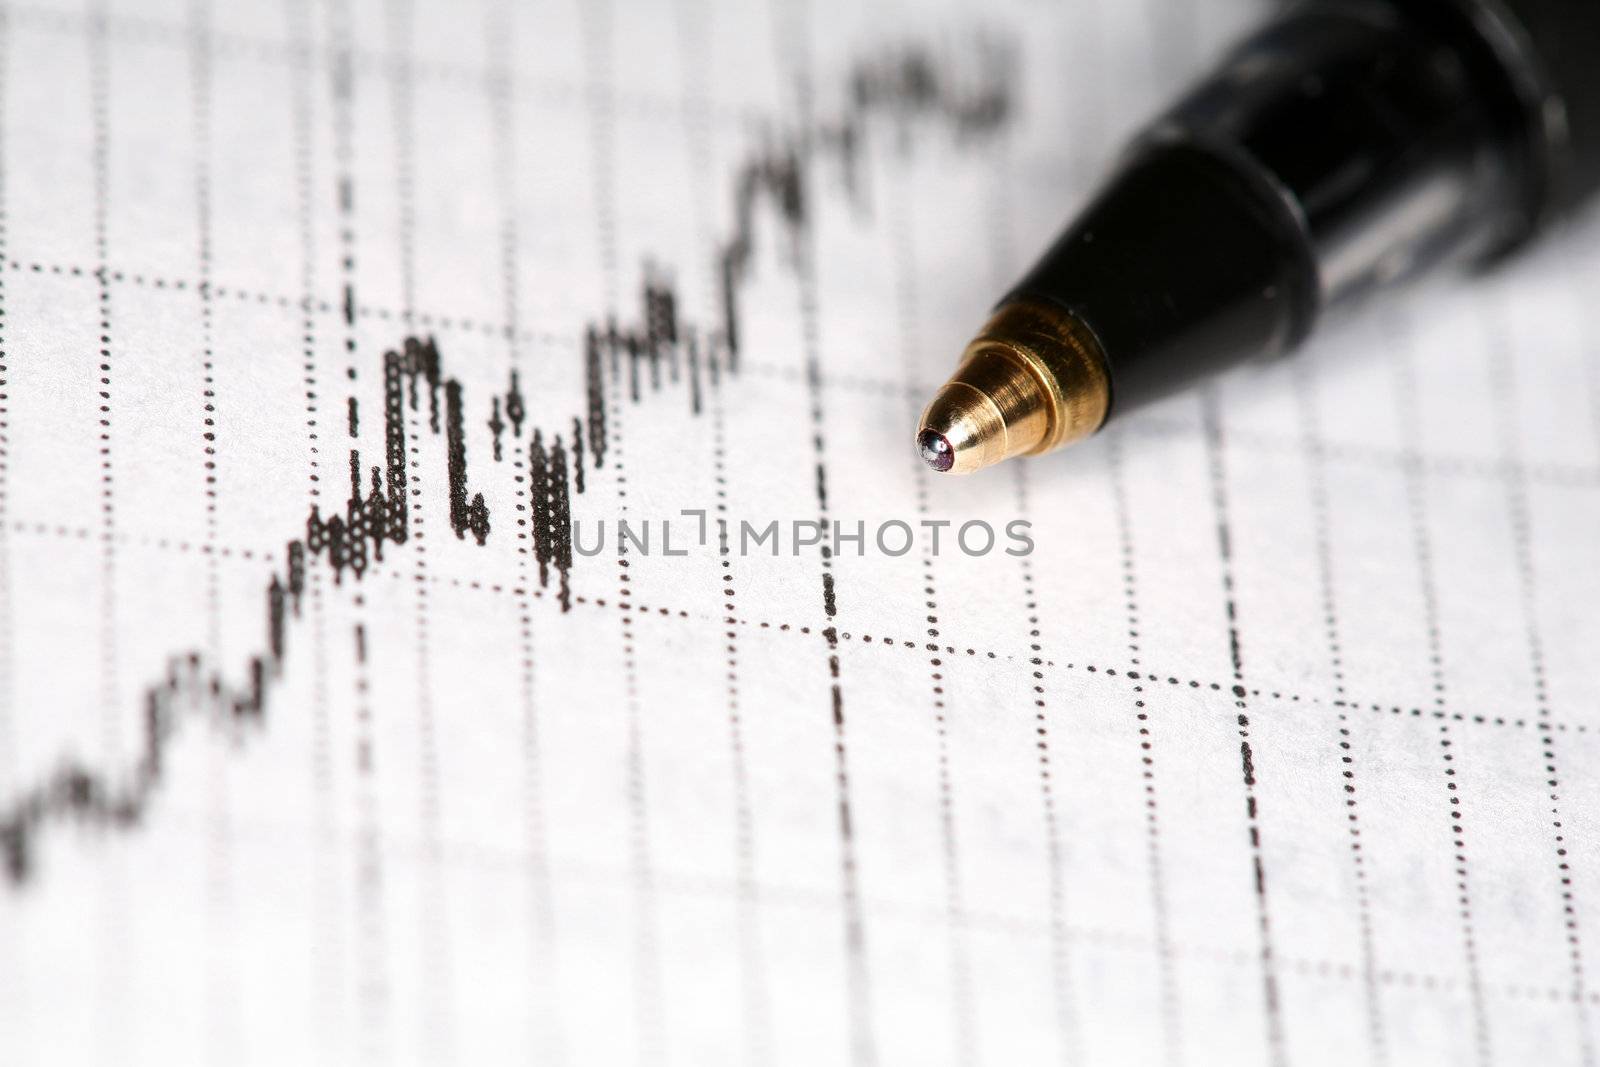 Stock photo: black pen on financial report